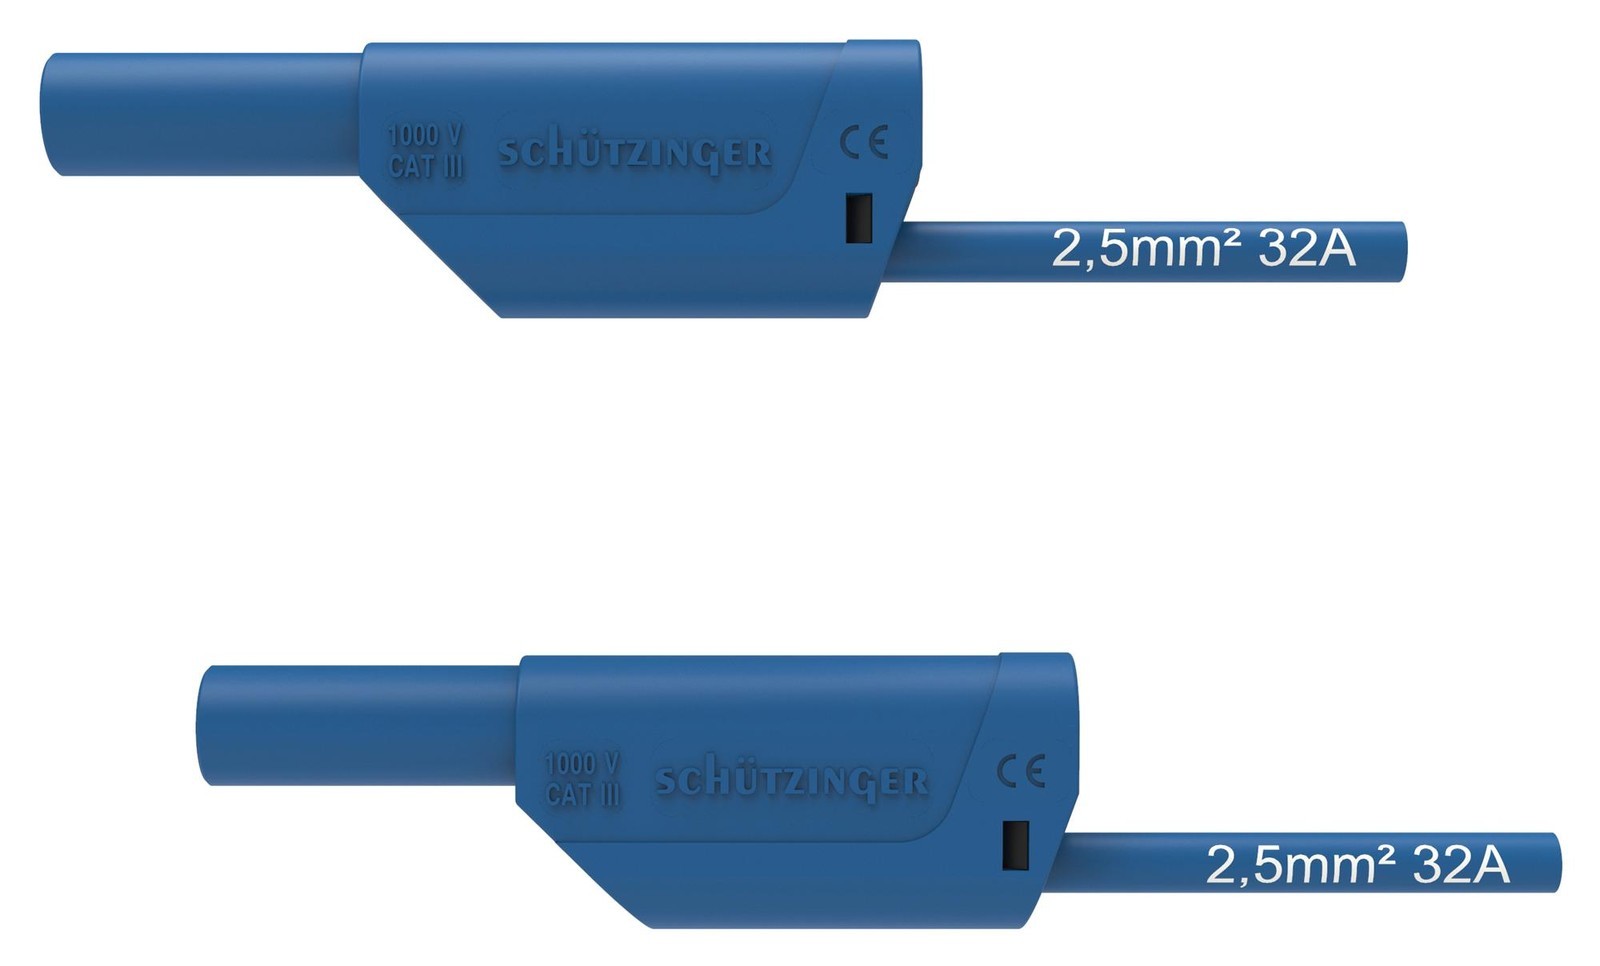 Schutzinger Di Vsfk 8700 / 2.5 / 200 / Bl 4mm Banana Plug-Sq, Shrouded, Blue, 2M